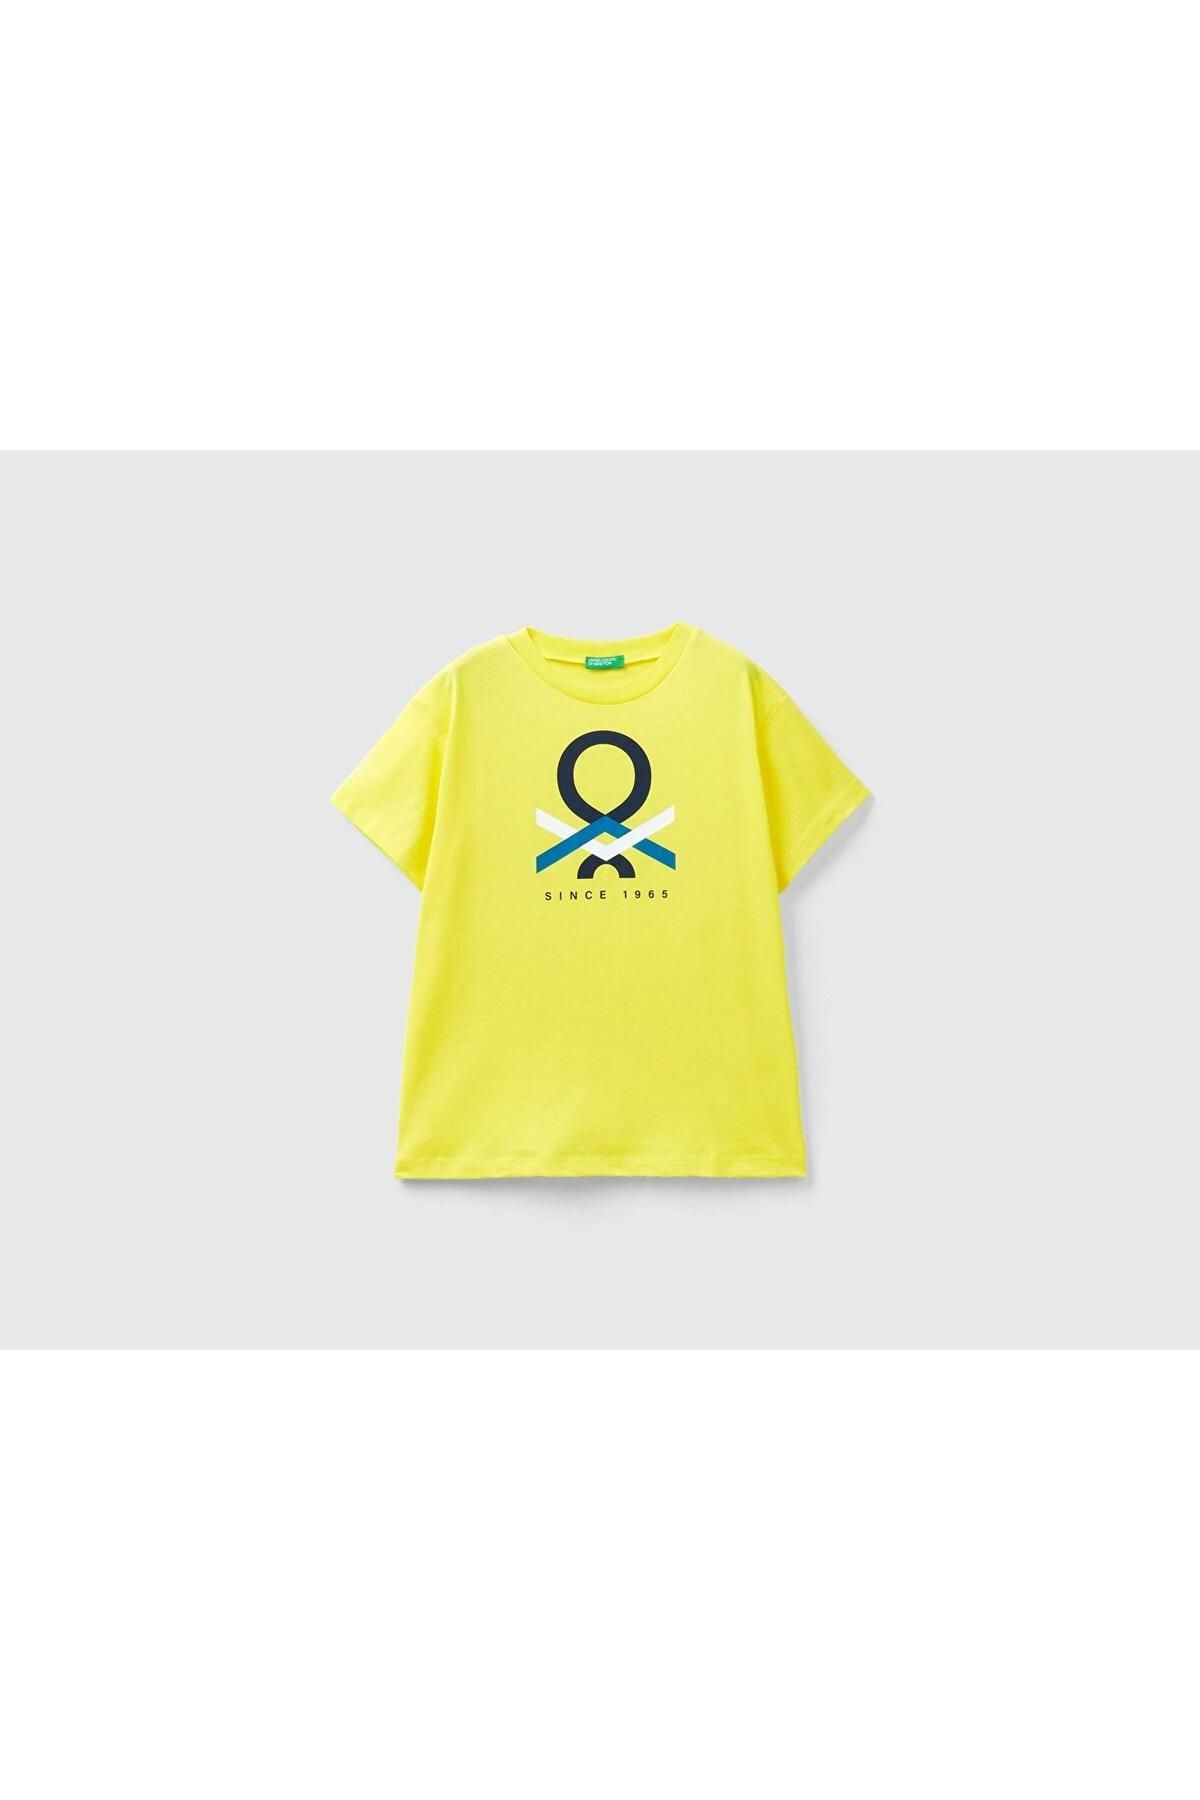 United Colors of Benetton Erkek Çocuk Tshirt 3ı1xc10h3